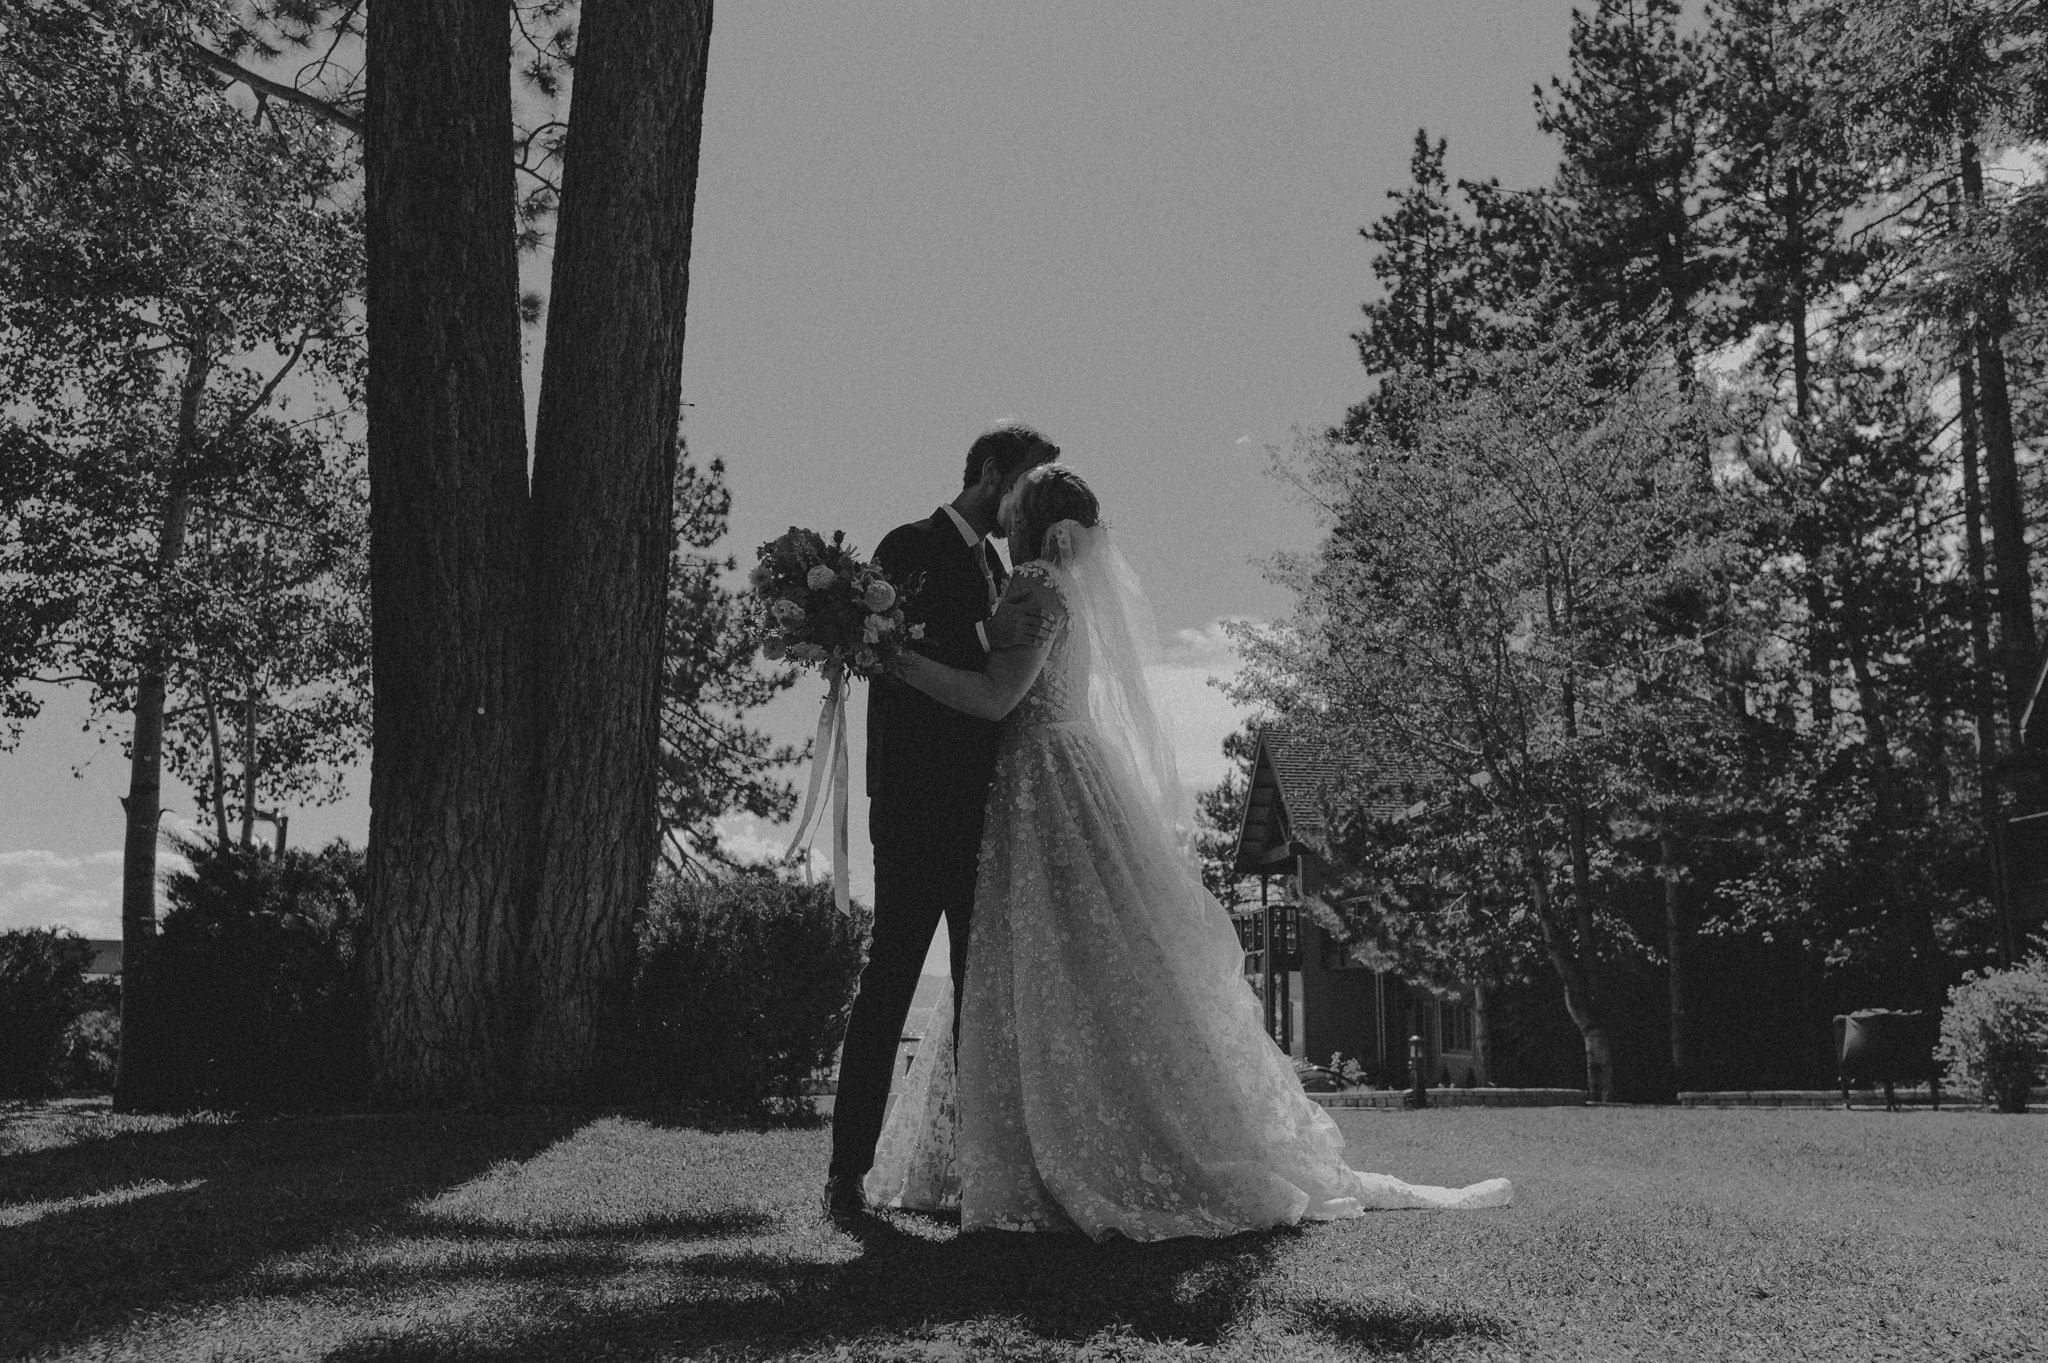 los angeles wedding photographers - queer lgbtq - itlaphoto.com-37.jpg